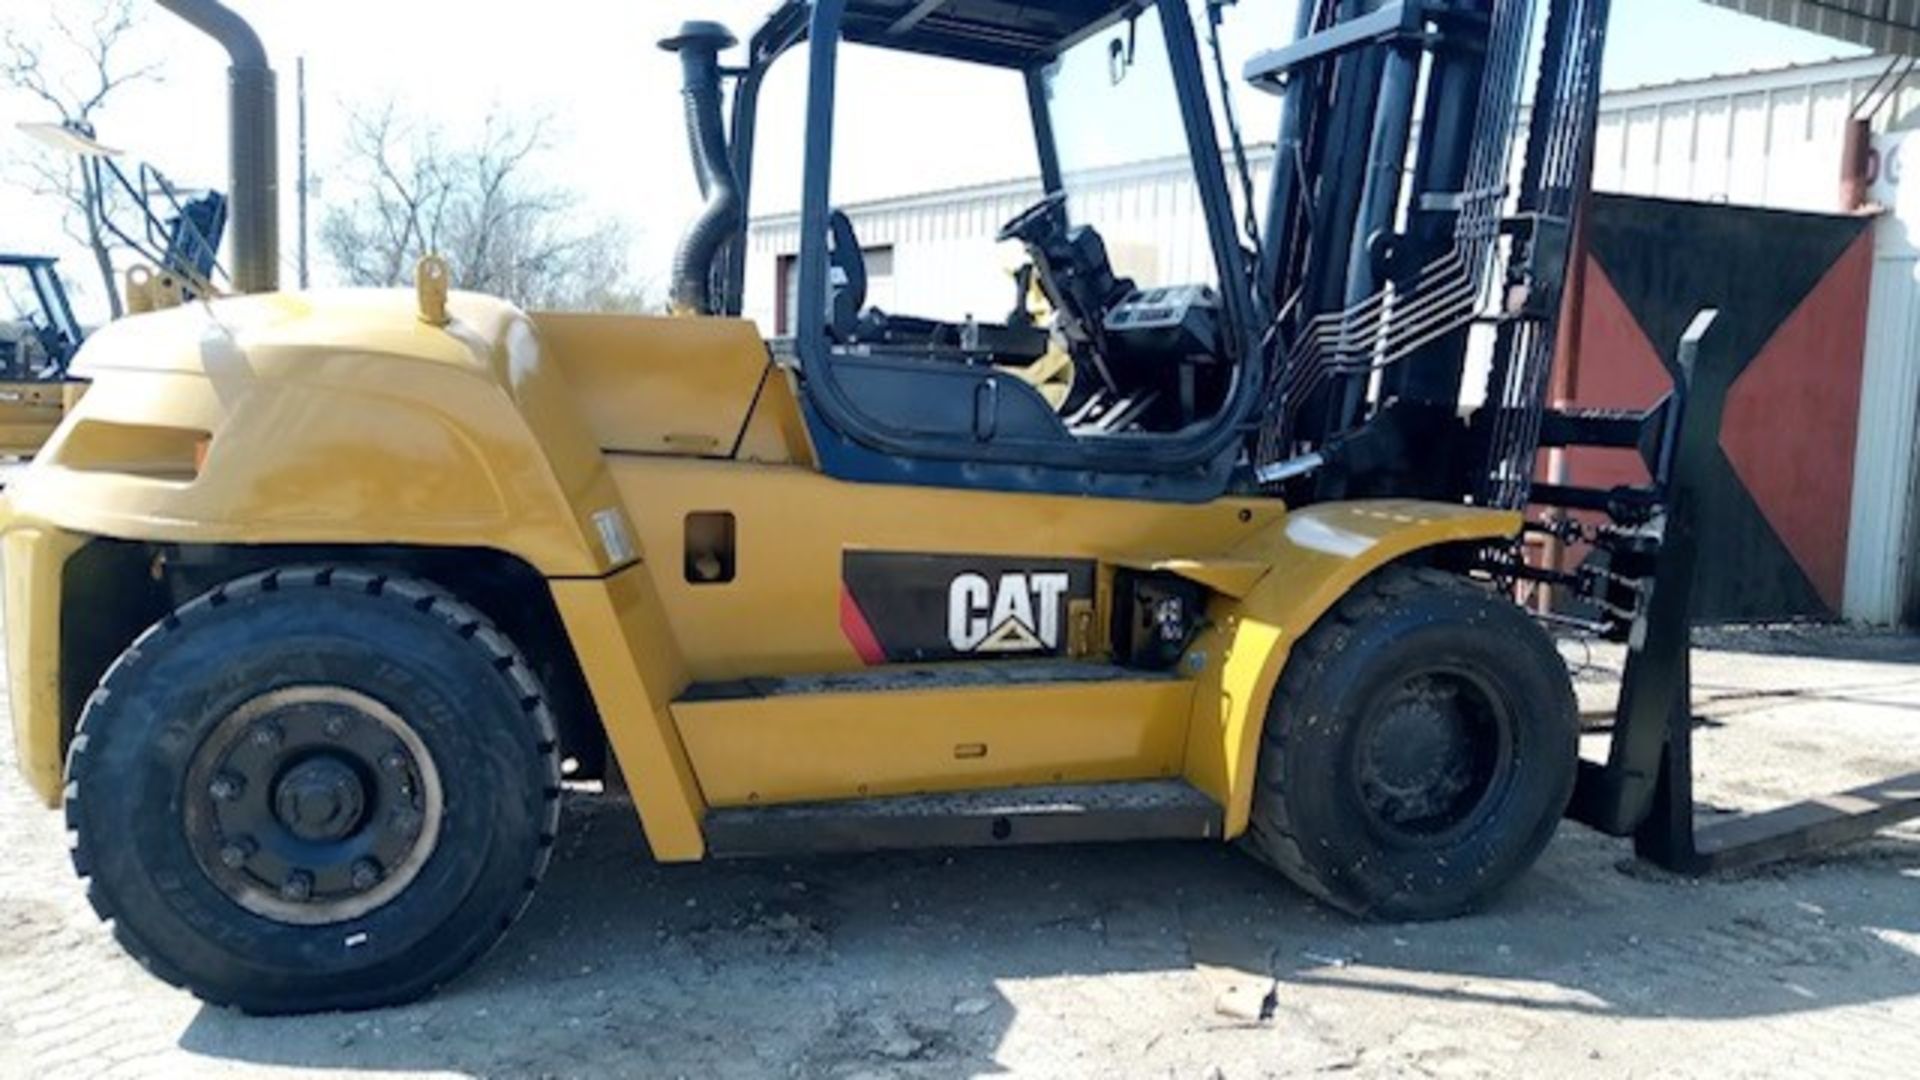 CAT Model P33000 Forklift, 33,000 # capacity